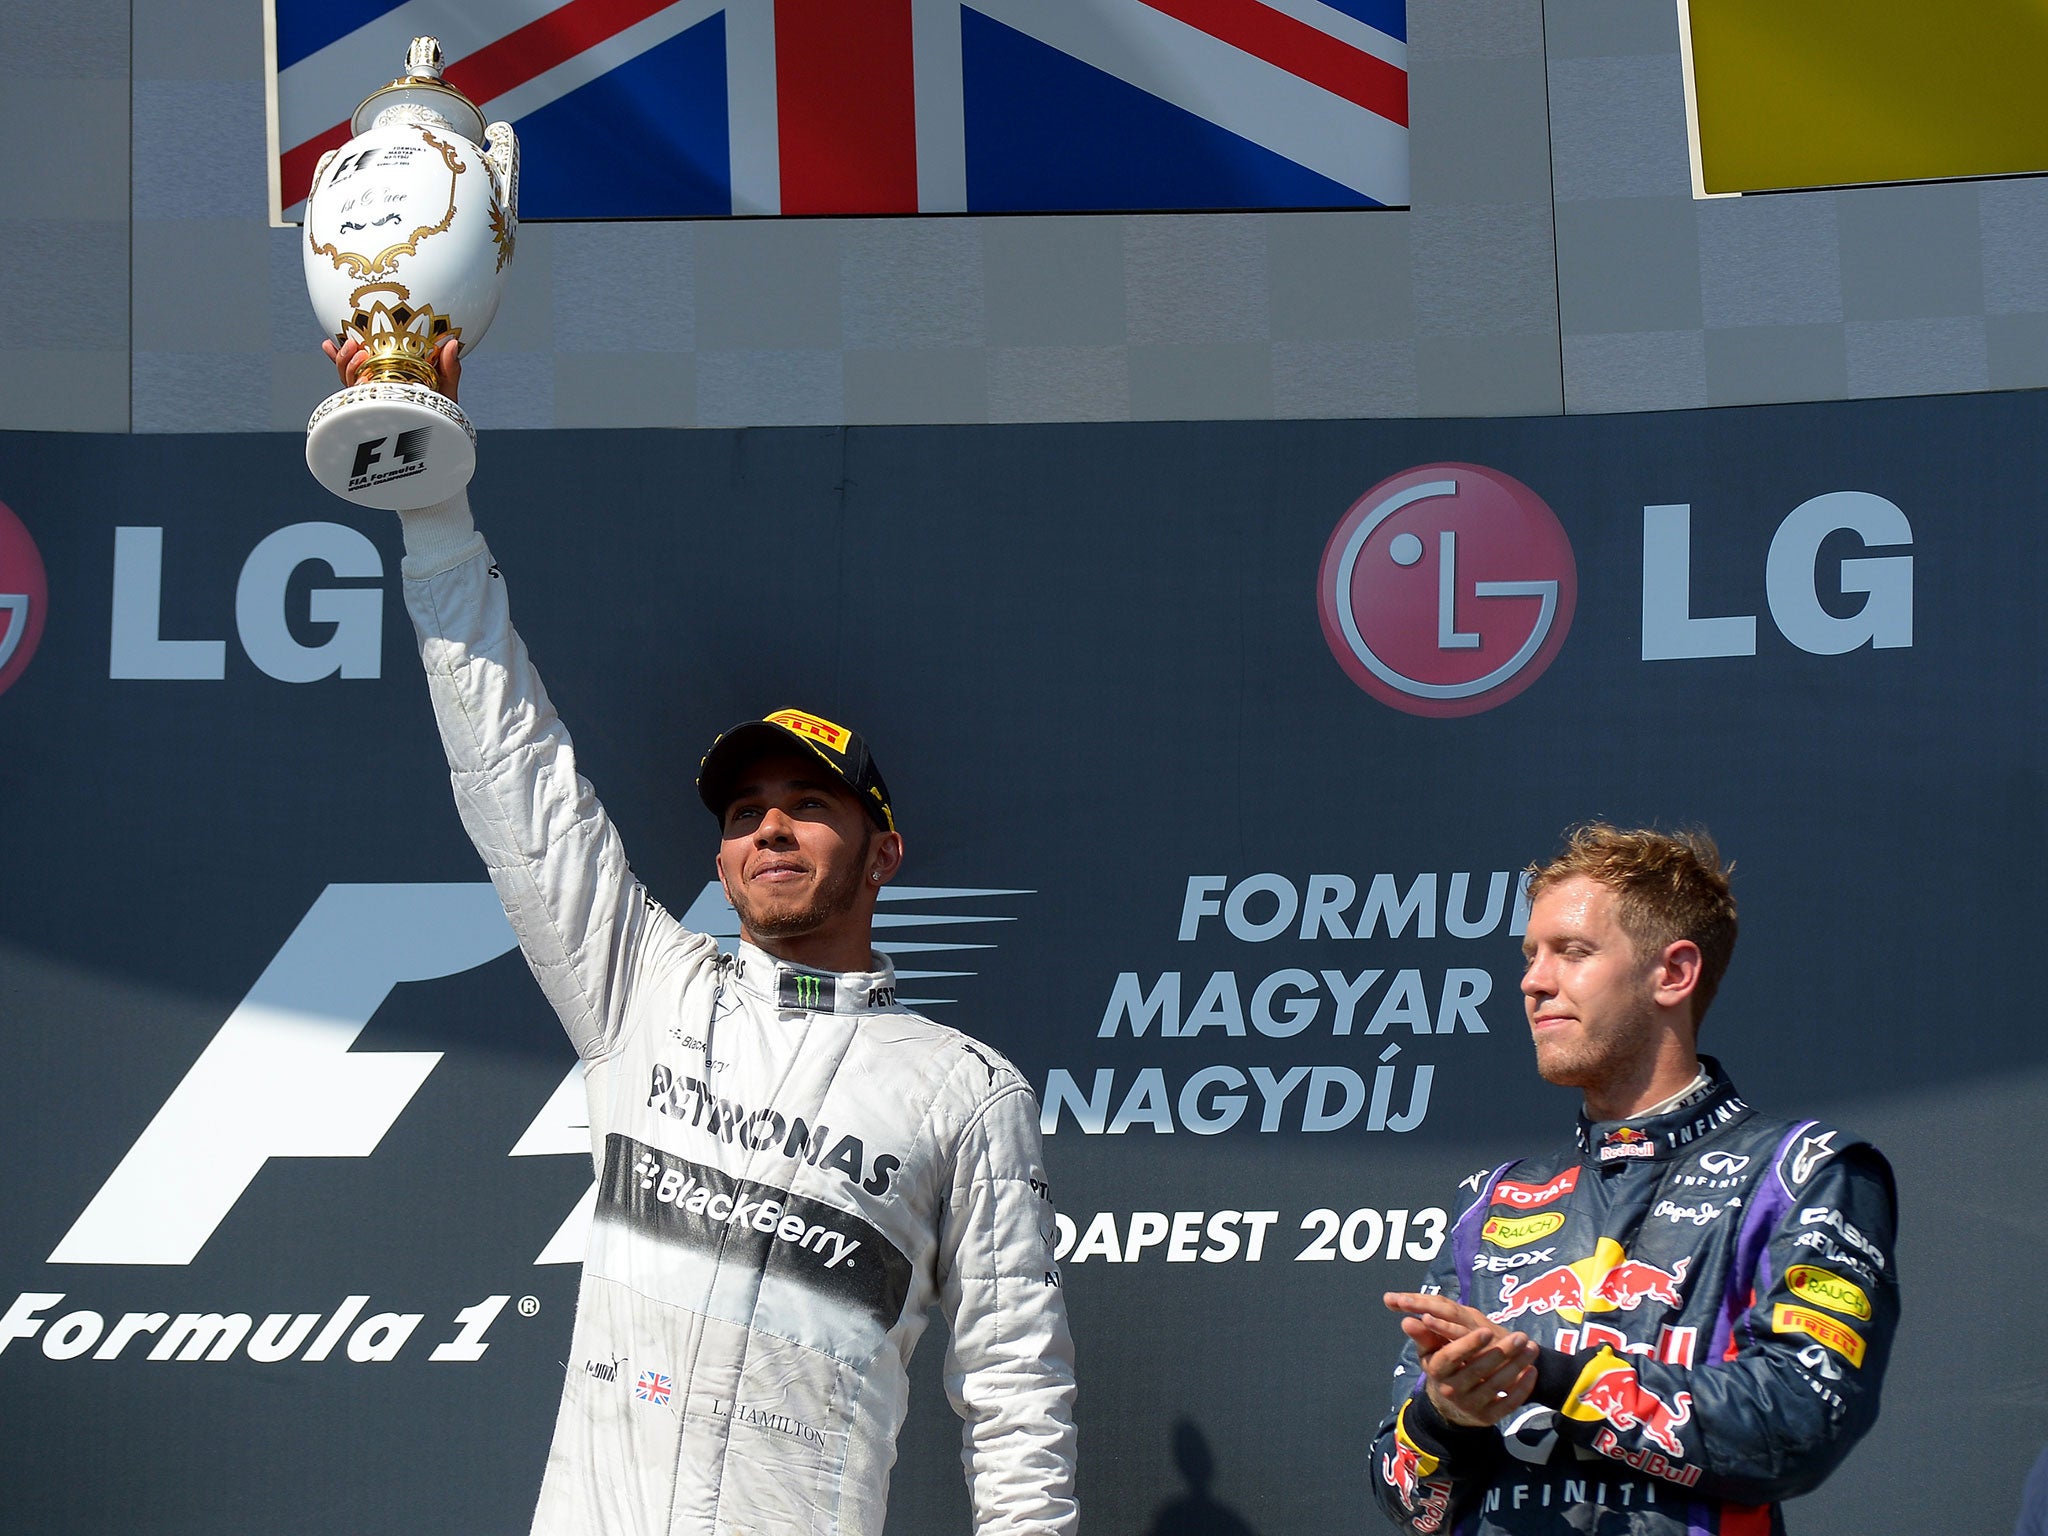 Lewis Hamilton celebrates winning the 2013 Hungarian Grand Prix